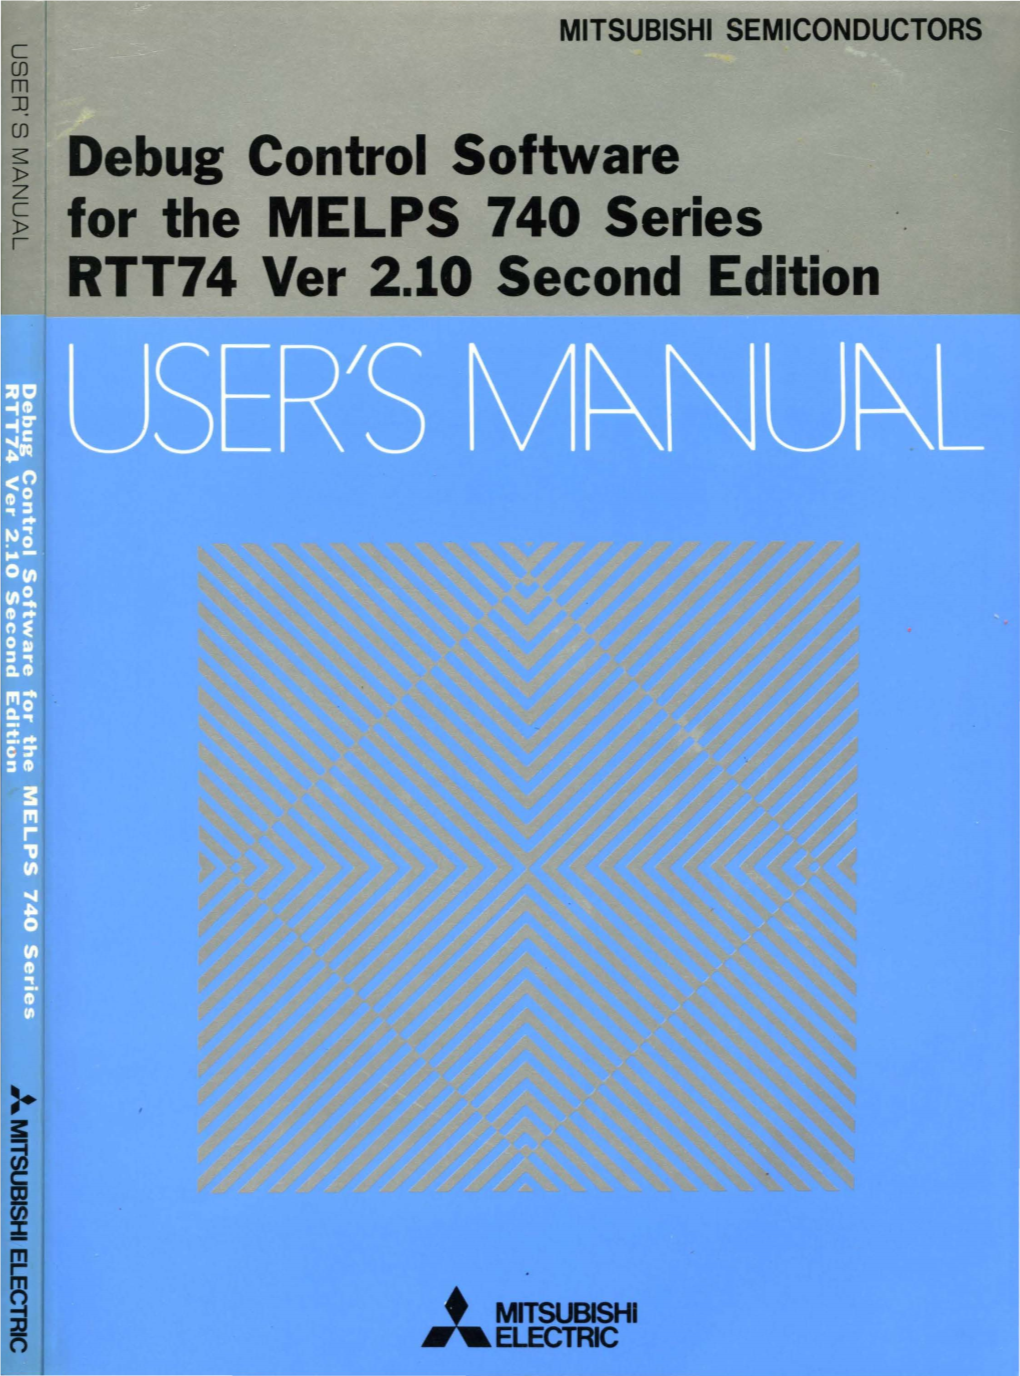 1992 MELPS 740 Debug Control Software RTT74.Pdf